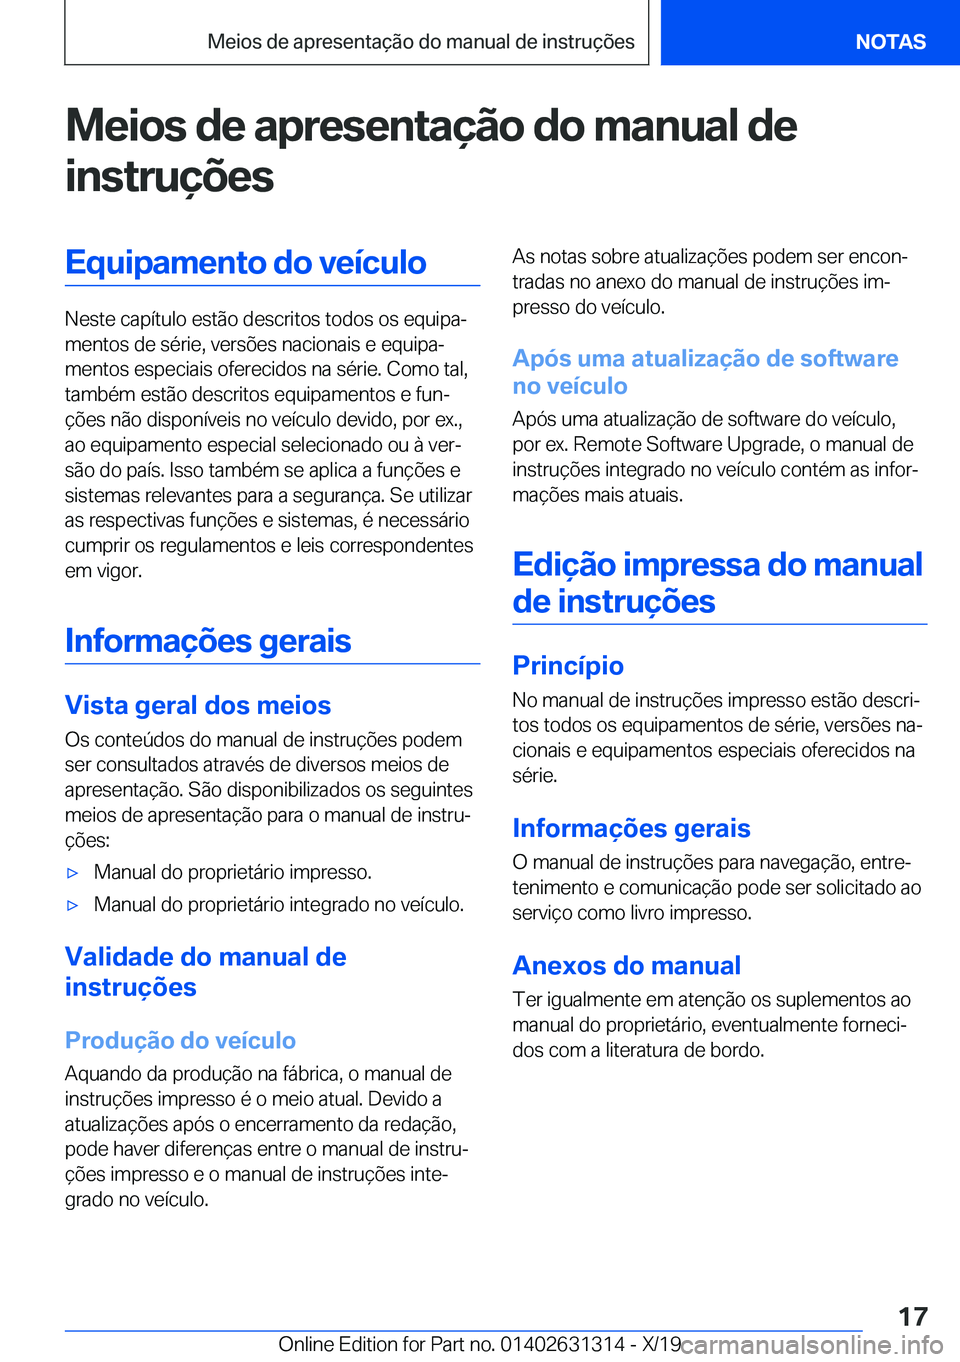 BMW M8 2020  Manual do condutor (in Portuguese) �M�e�i�o�s��d�e��a�p�r�e�s�e�n�t�a�